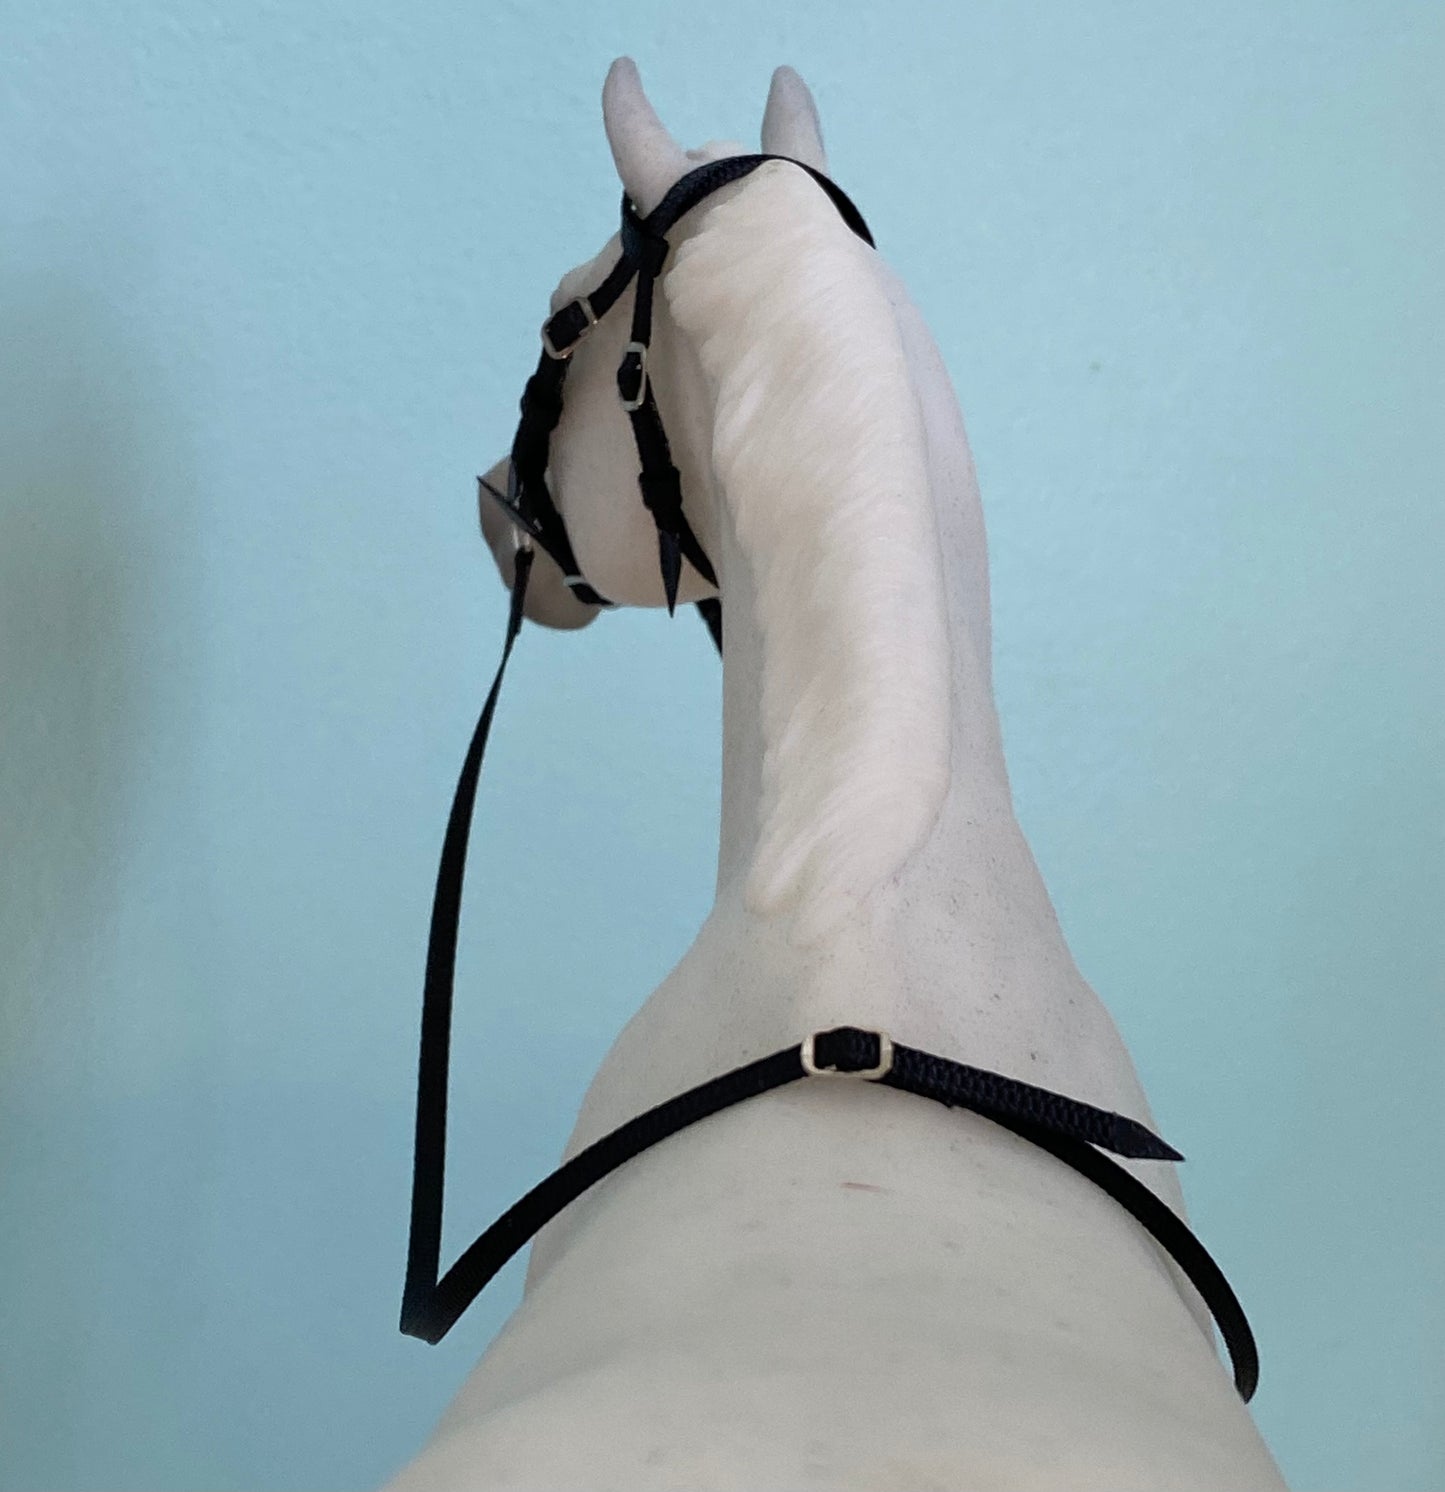 Traditional Breyer Model Horse Adjustable English Bridle